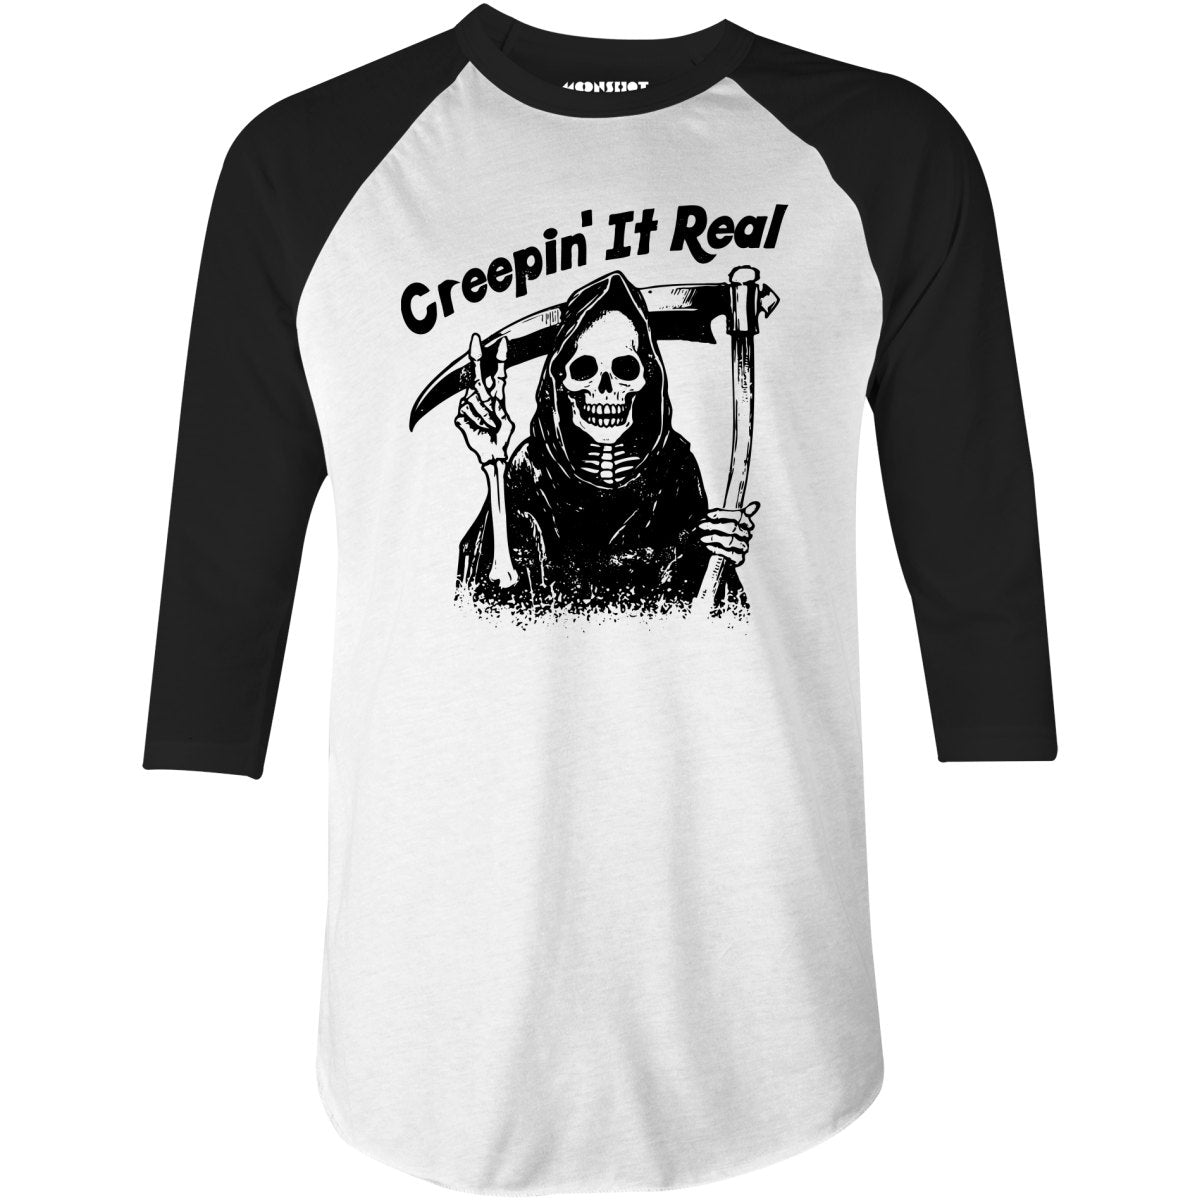 Creepin' it Real - 3/4 Sleeve Raglan T-Shirt